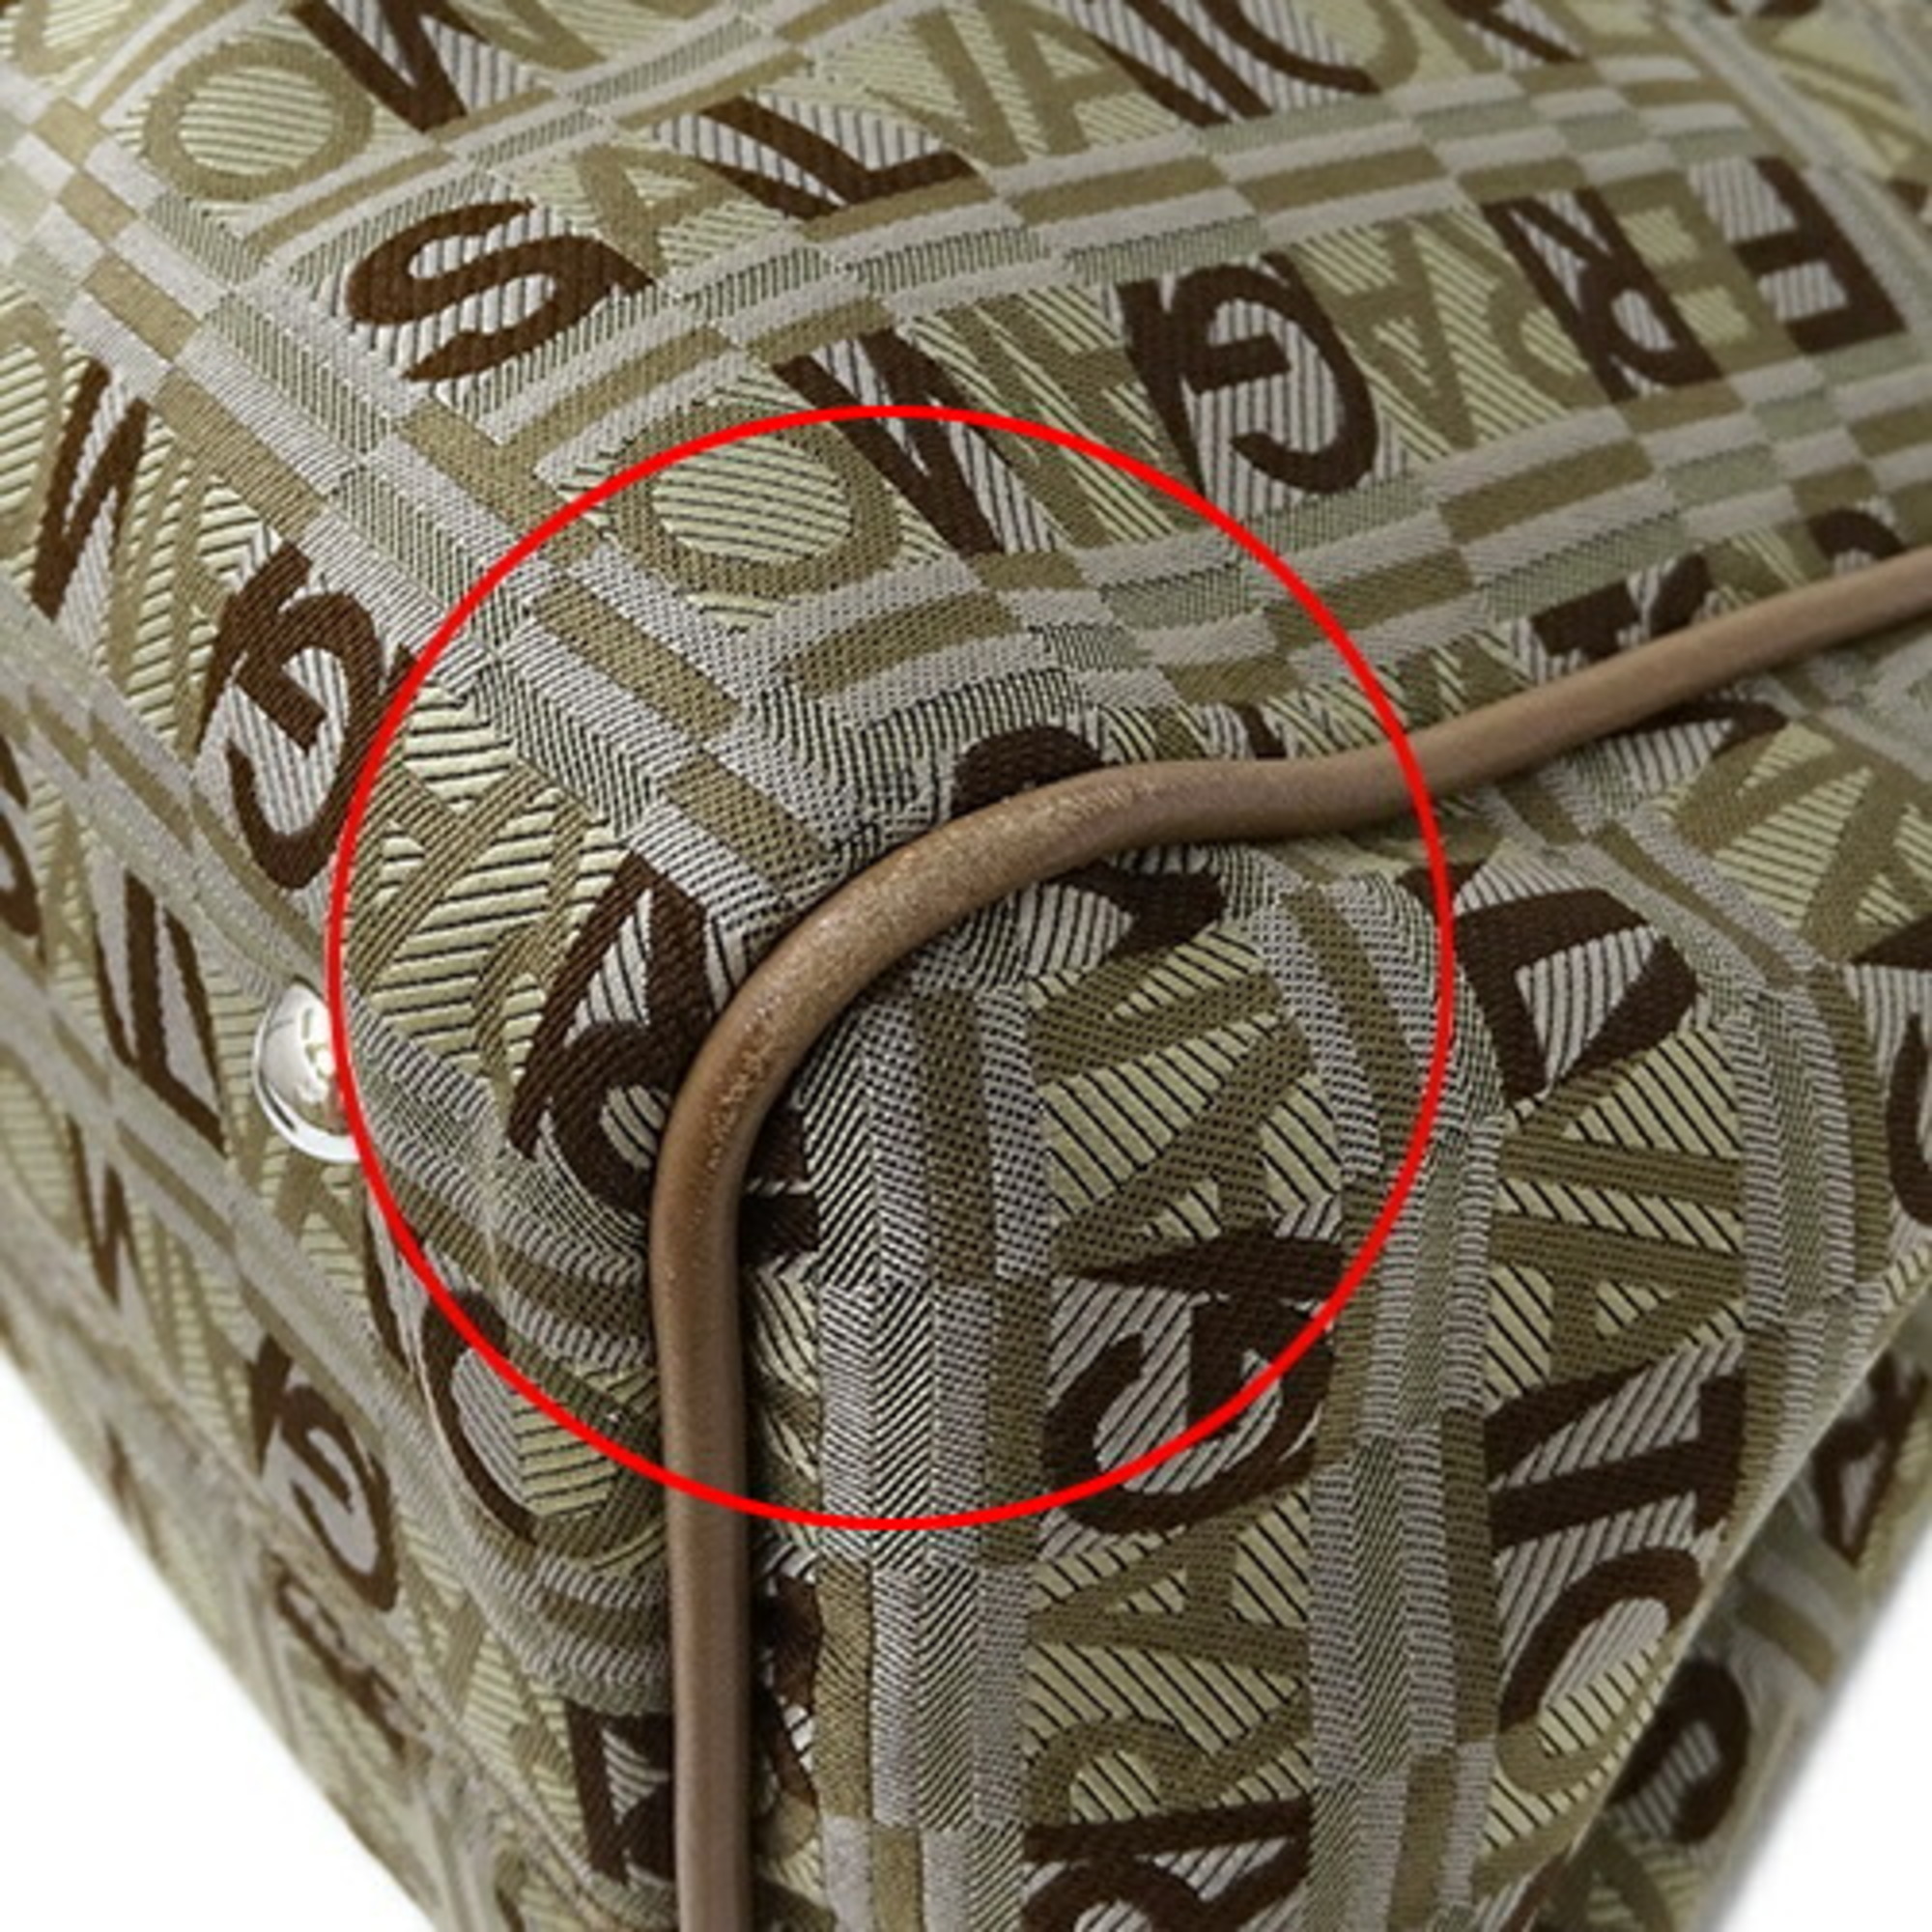 Salvatore Ferragamo Ferragamo Bags for Women Tote Bag Shoulder Nylon Khaki Brown Compact